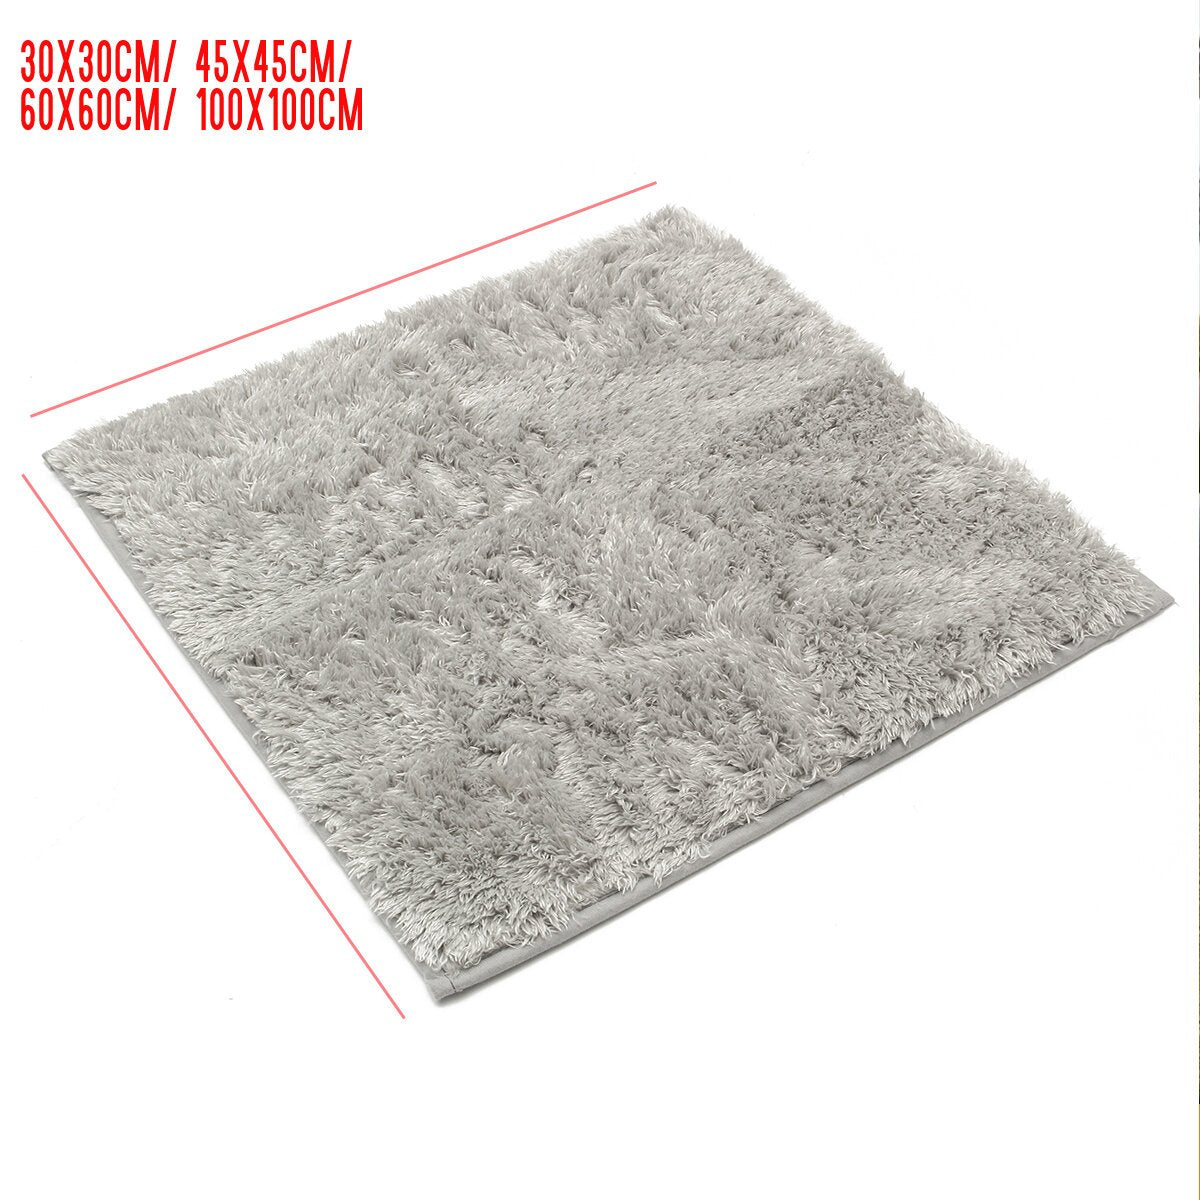 30cm / 45cm / 60cm / 100cm Grey Plush Carpet Anti-Skid Bedroom Livingroom Rug